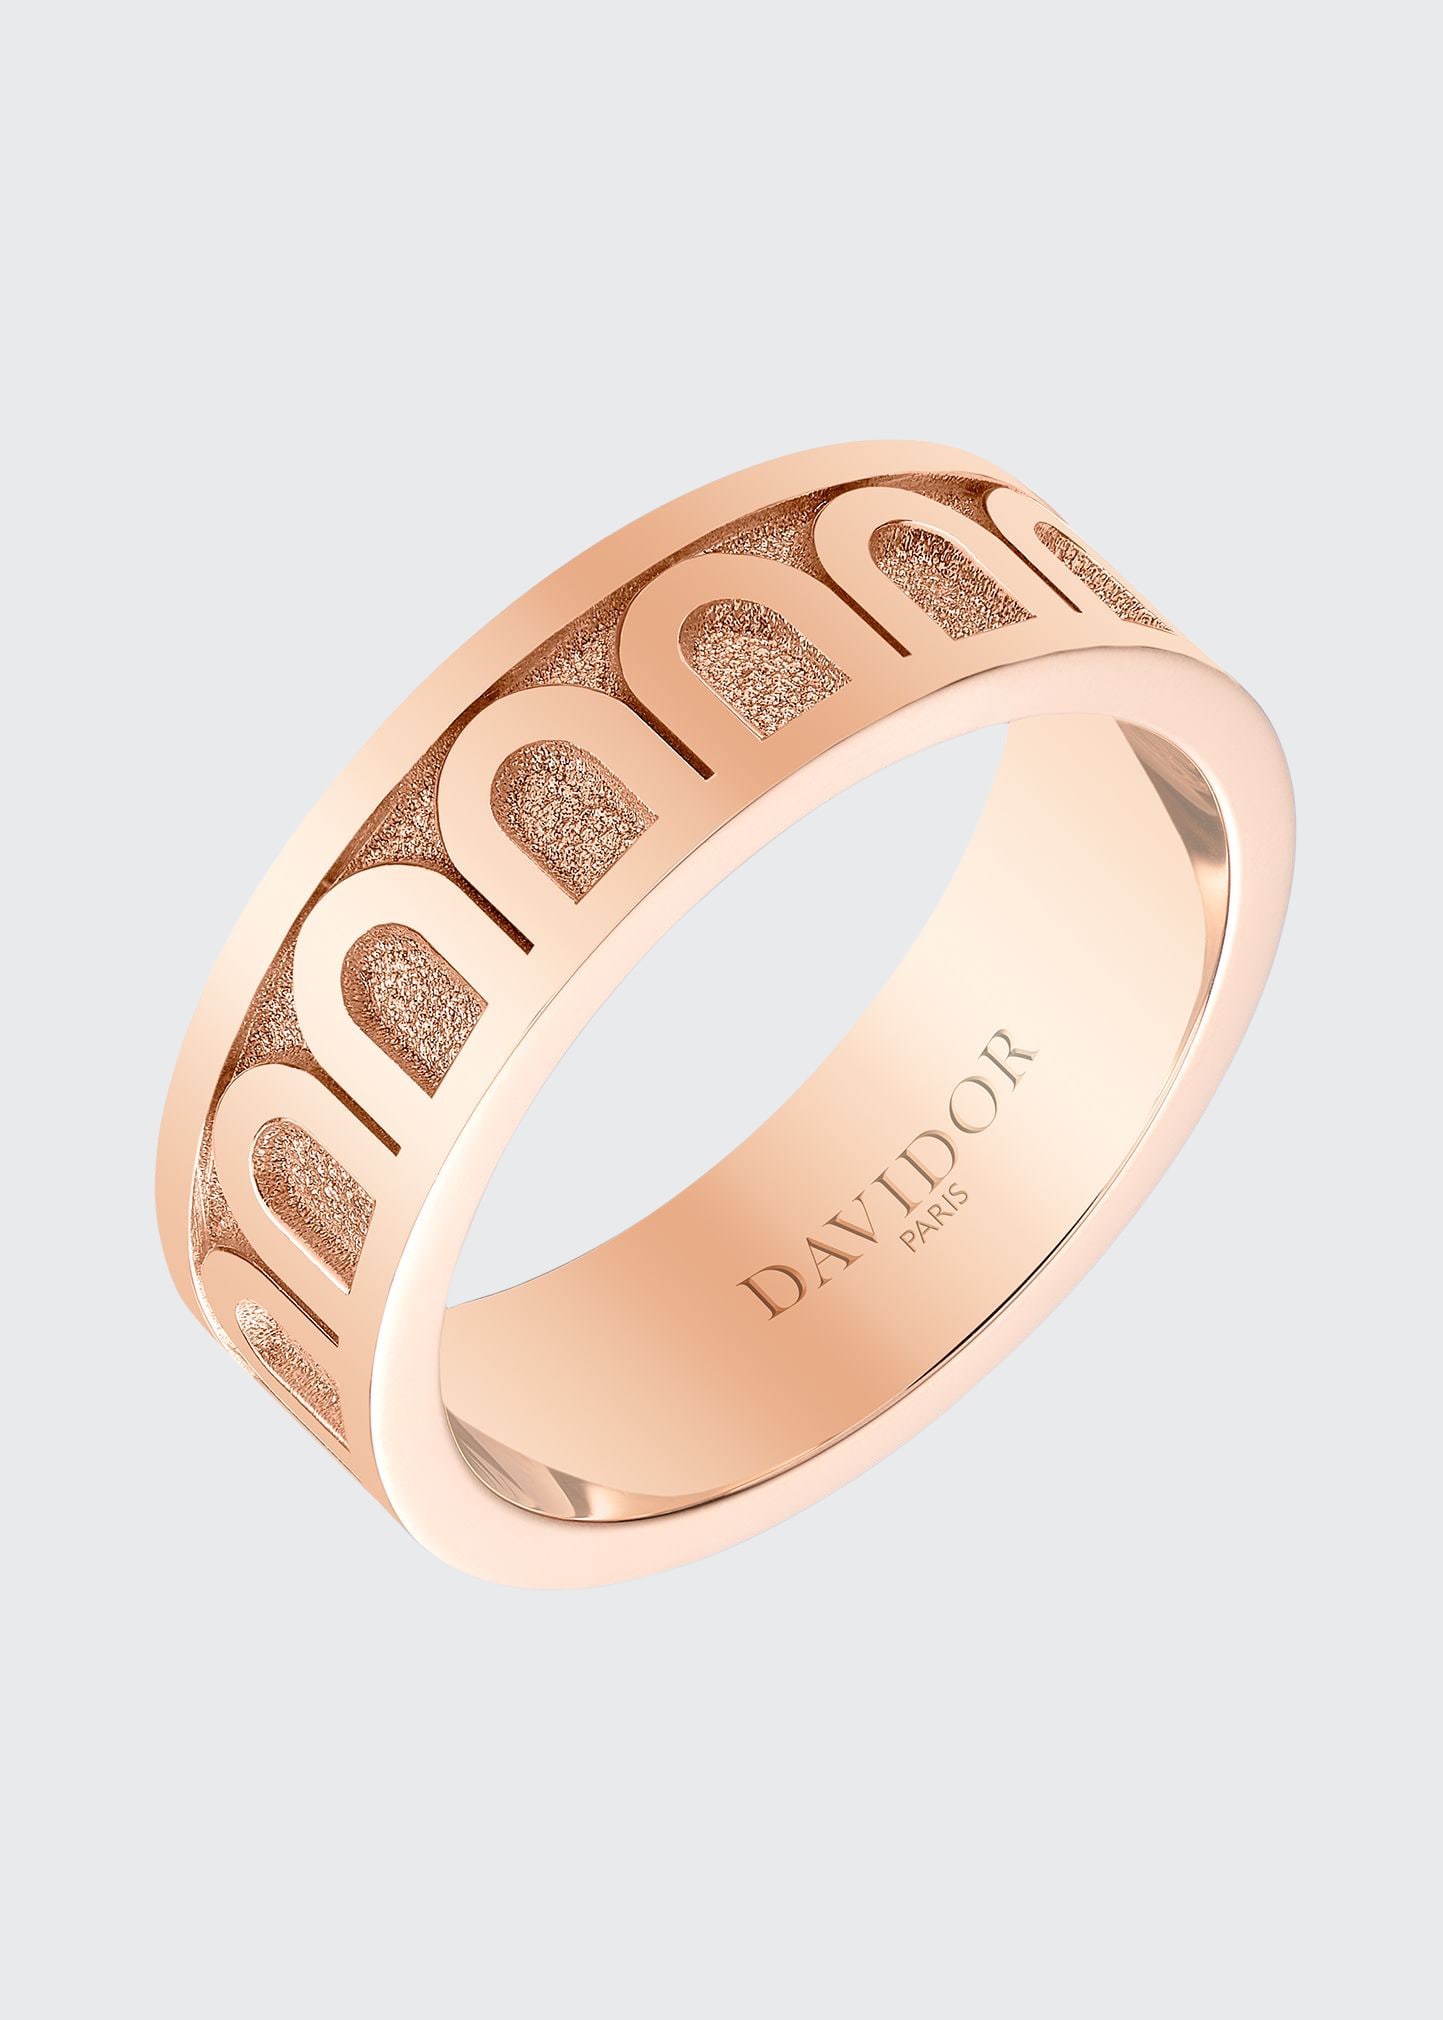 DAVIDOR L'Arc de Davidor 18k Rose Gold Ring - Med. Model, Satin Finish, Sz. 53